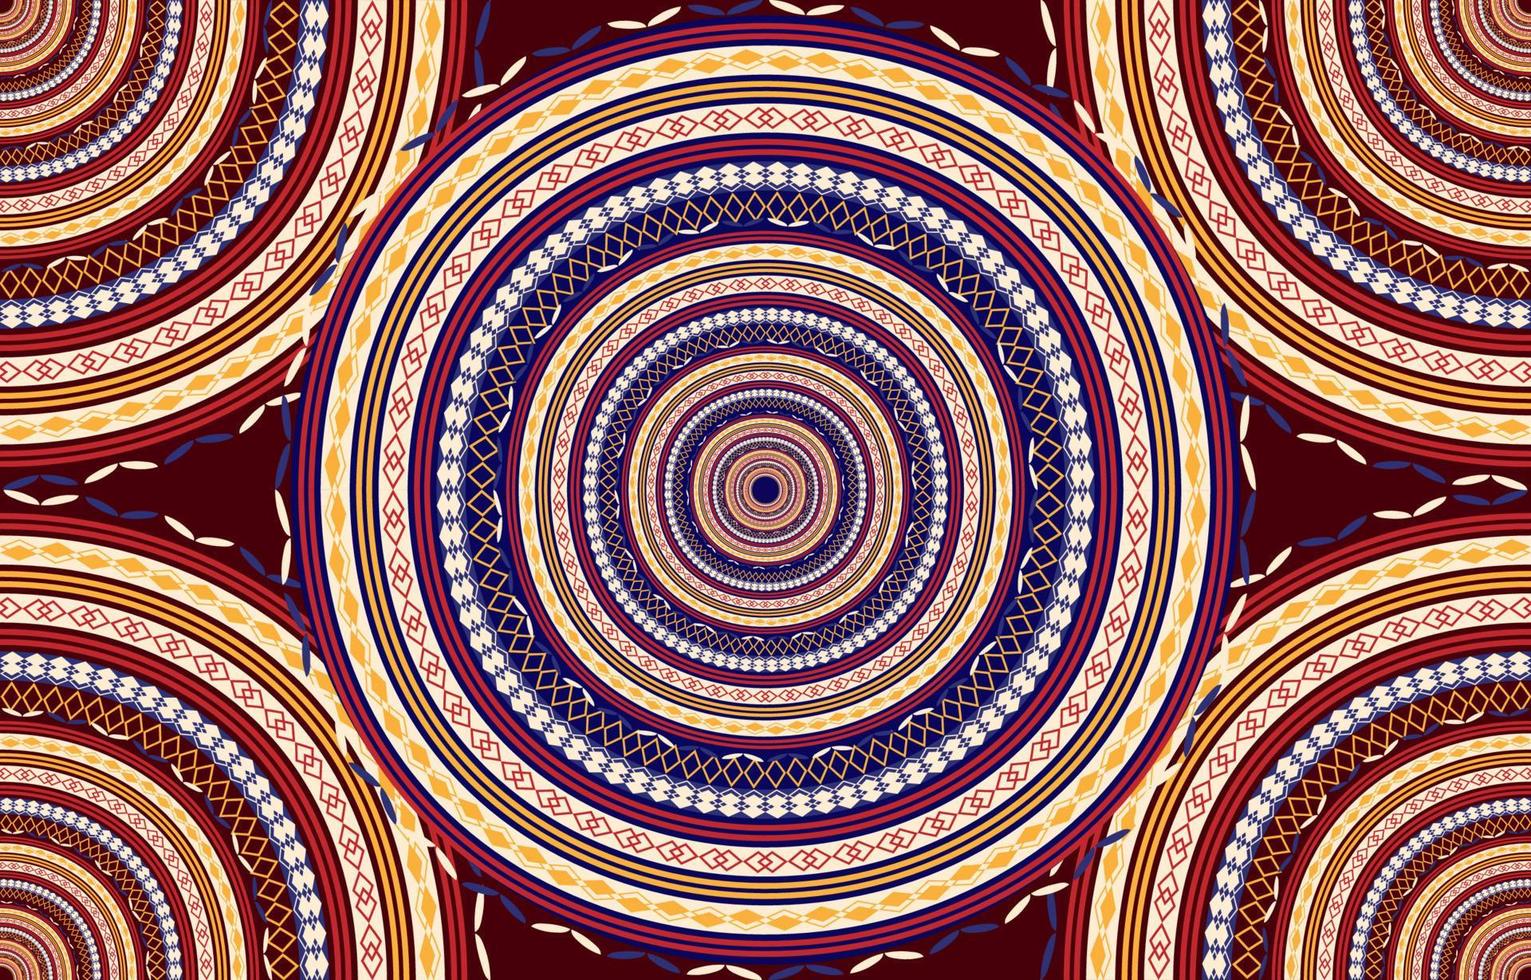 mandalas textil- mönster. etnisk geometrisk stam- inföding aztec arabesk tyg matta indisk arab sömlös mönster. utsmyckad linje grafisk broderi stil. vektor illustration retro årgång design.